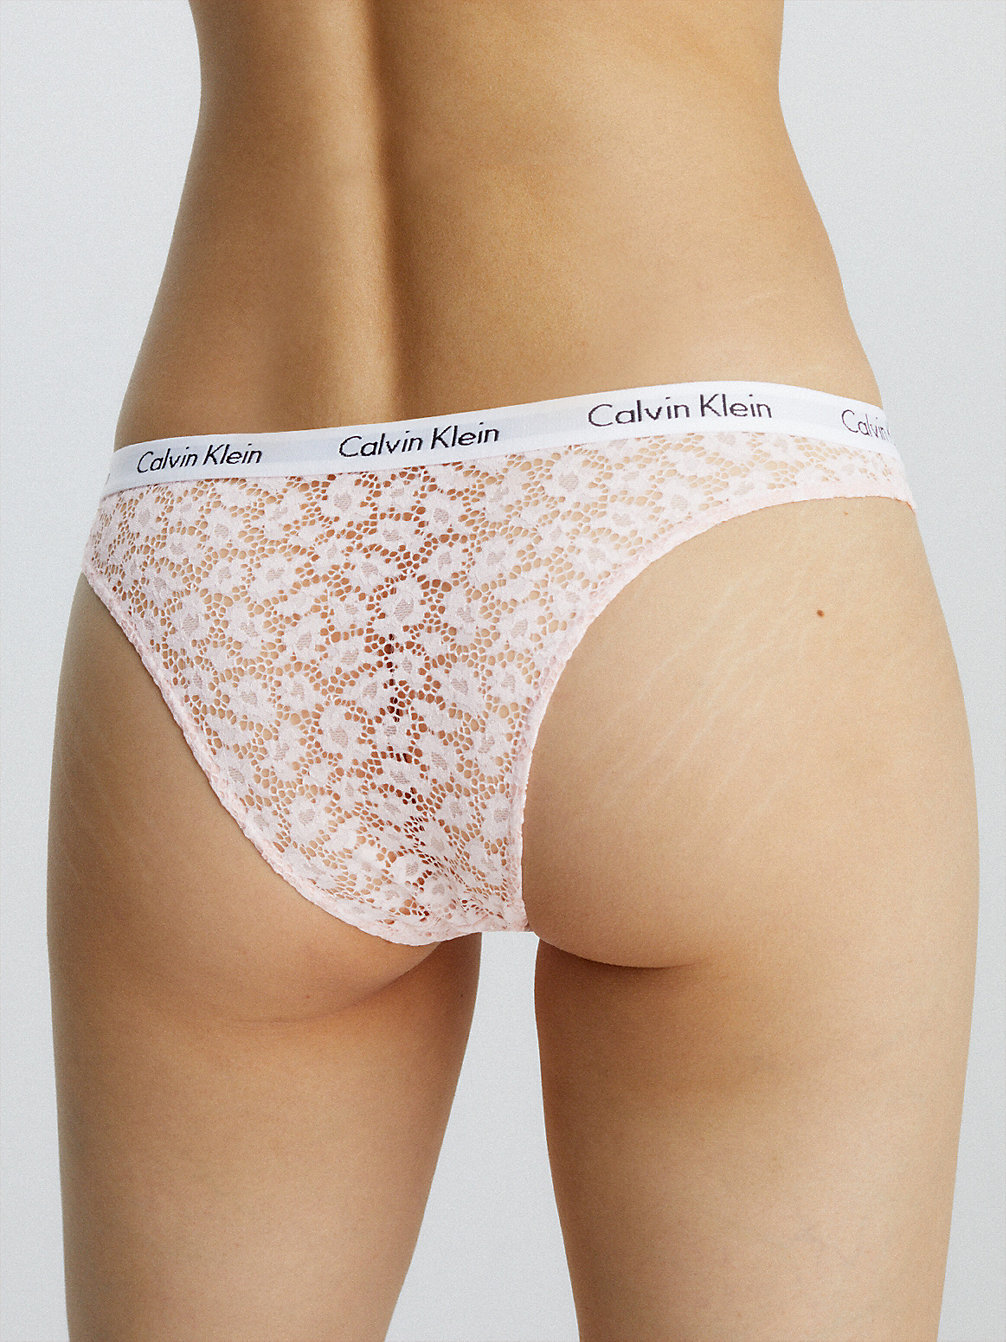 NYMPHS THIGH > Brazilian Slip - Carousel > undefined dames - Calvin Klein